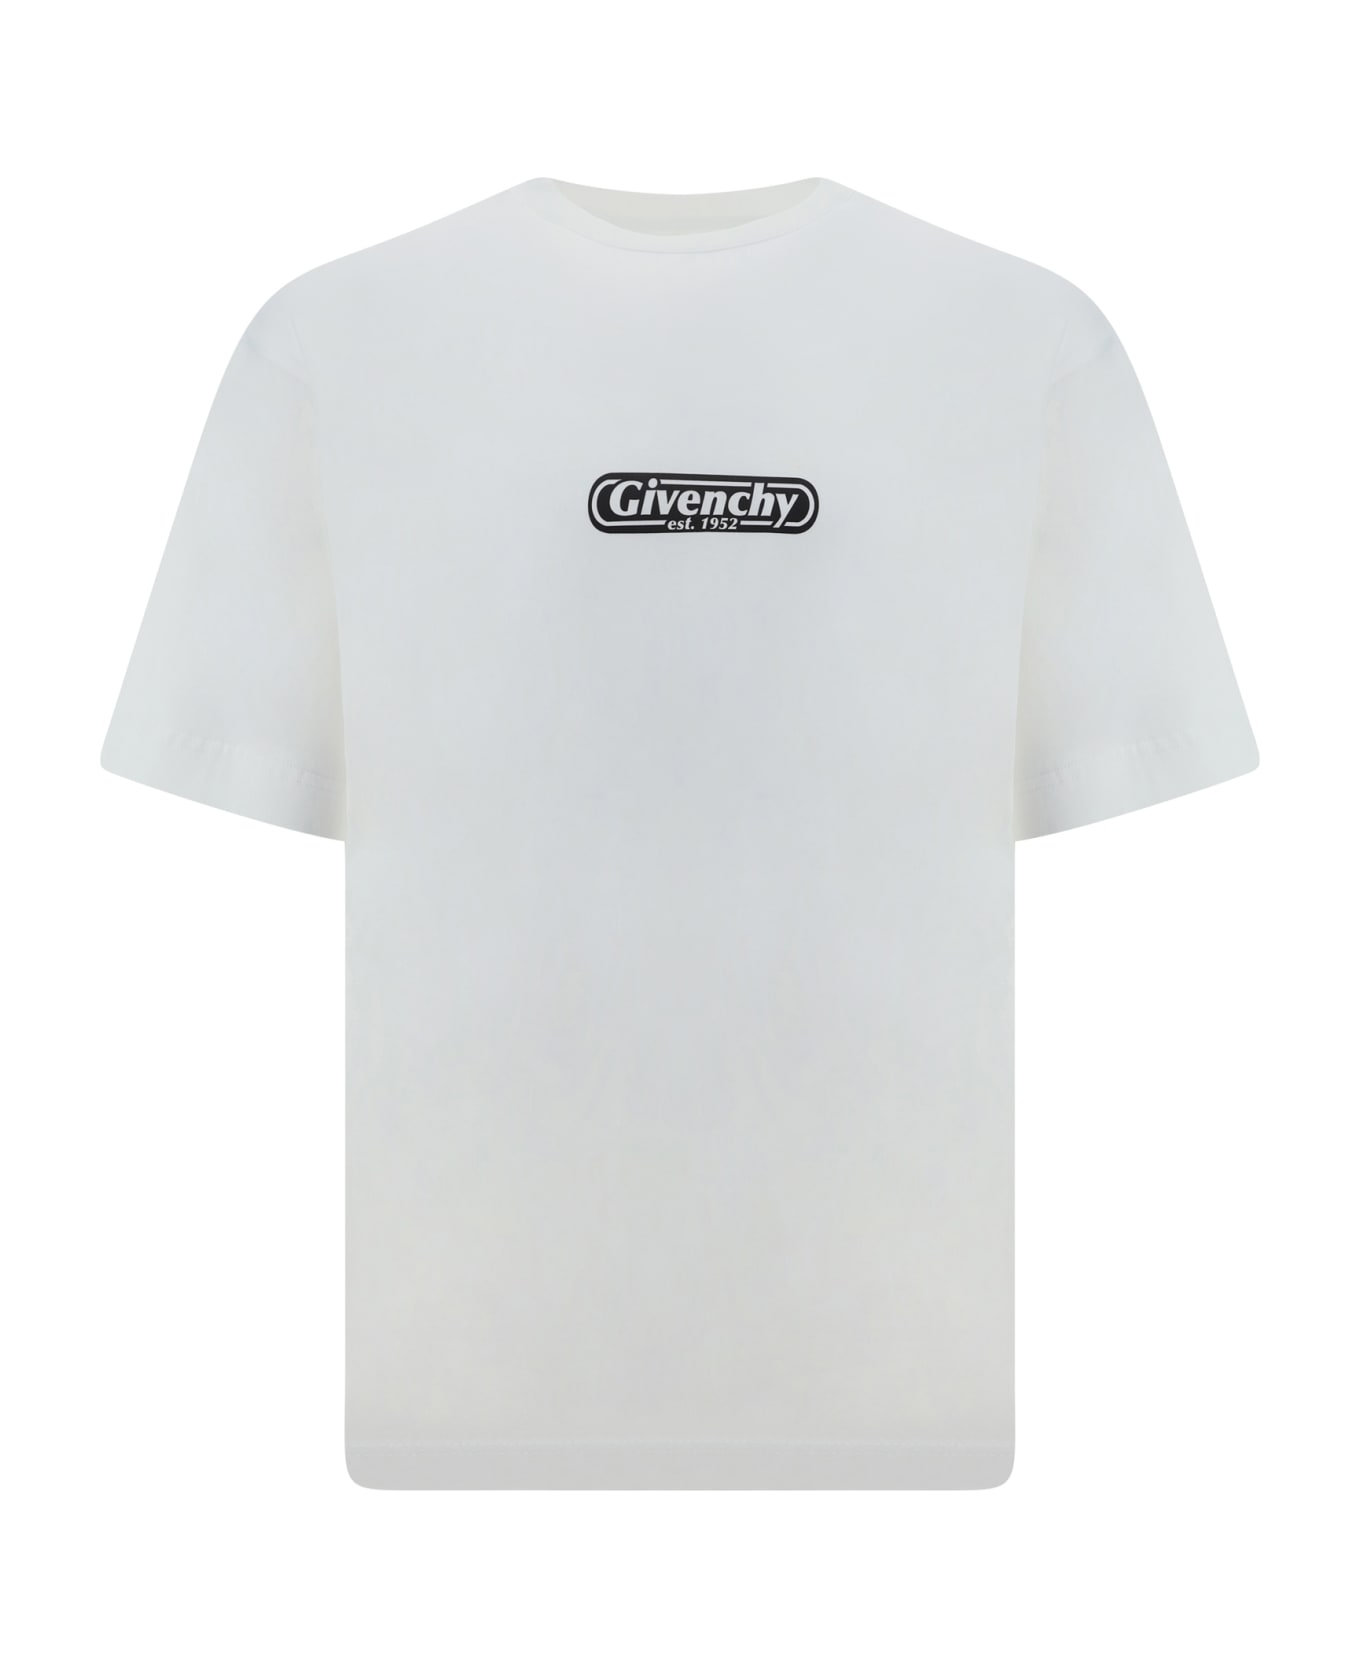 Givenchy Logo 1952 Printed Crewneck T-shirt - White